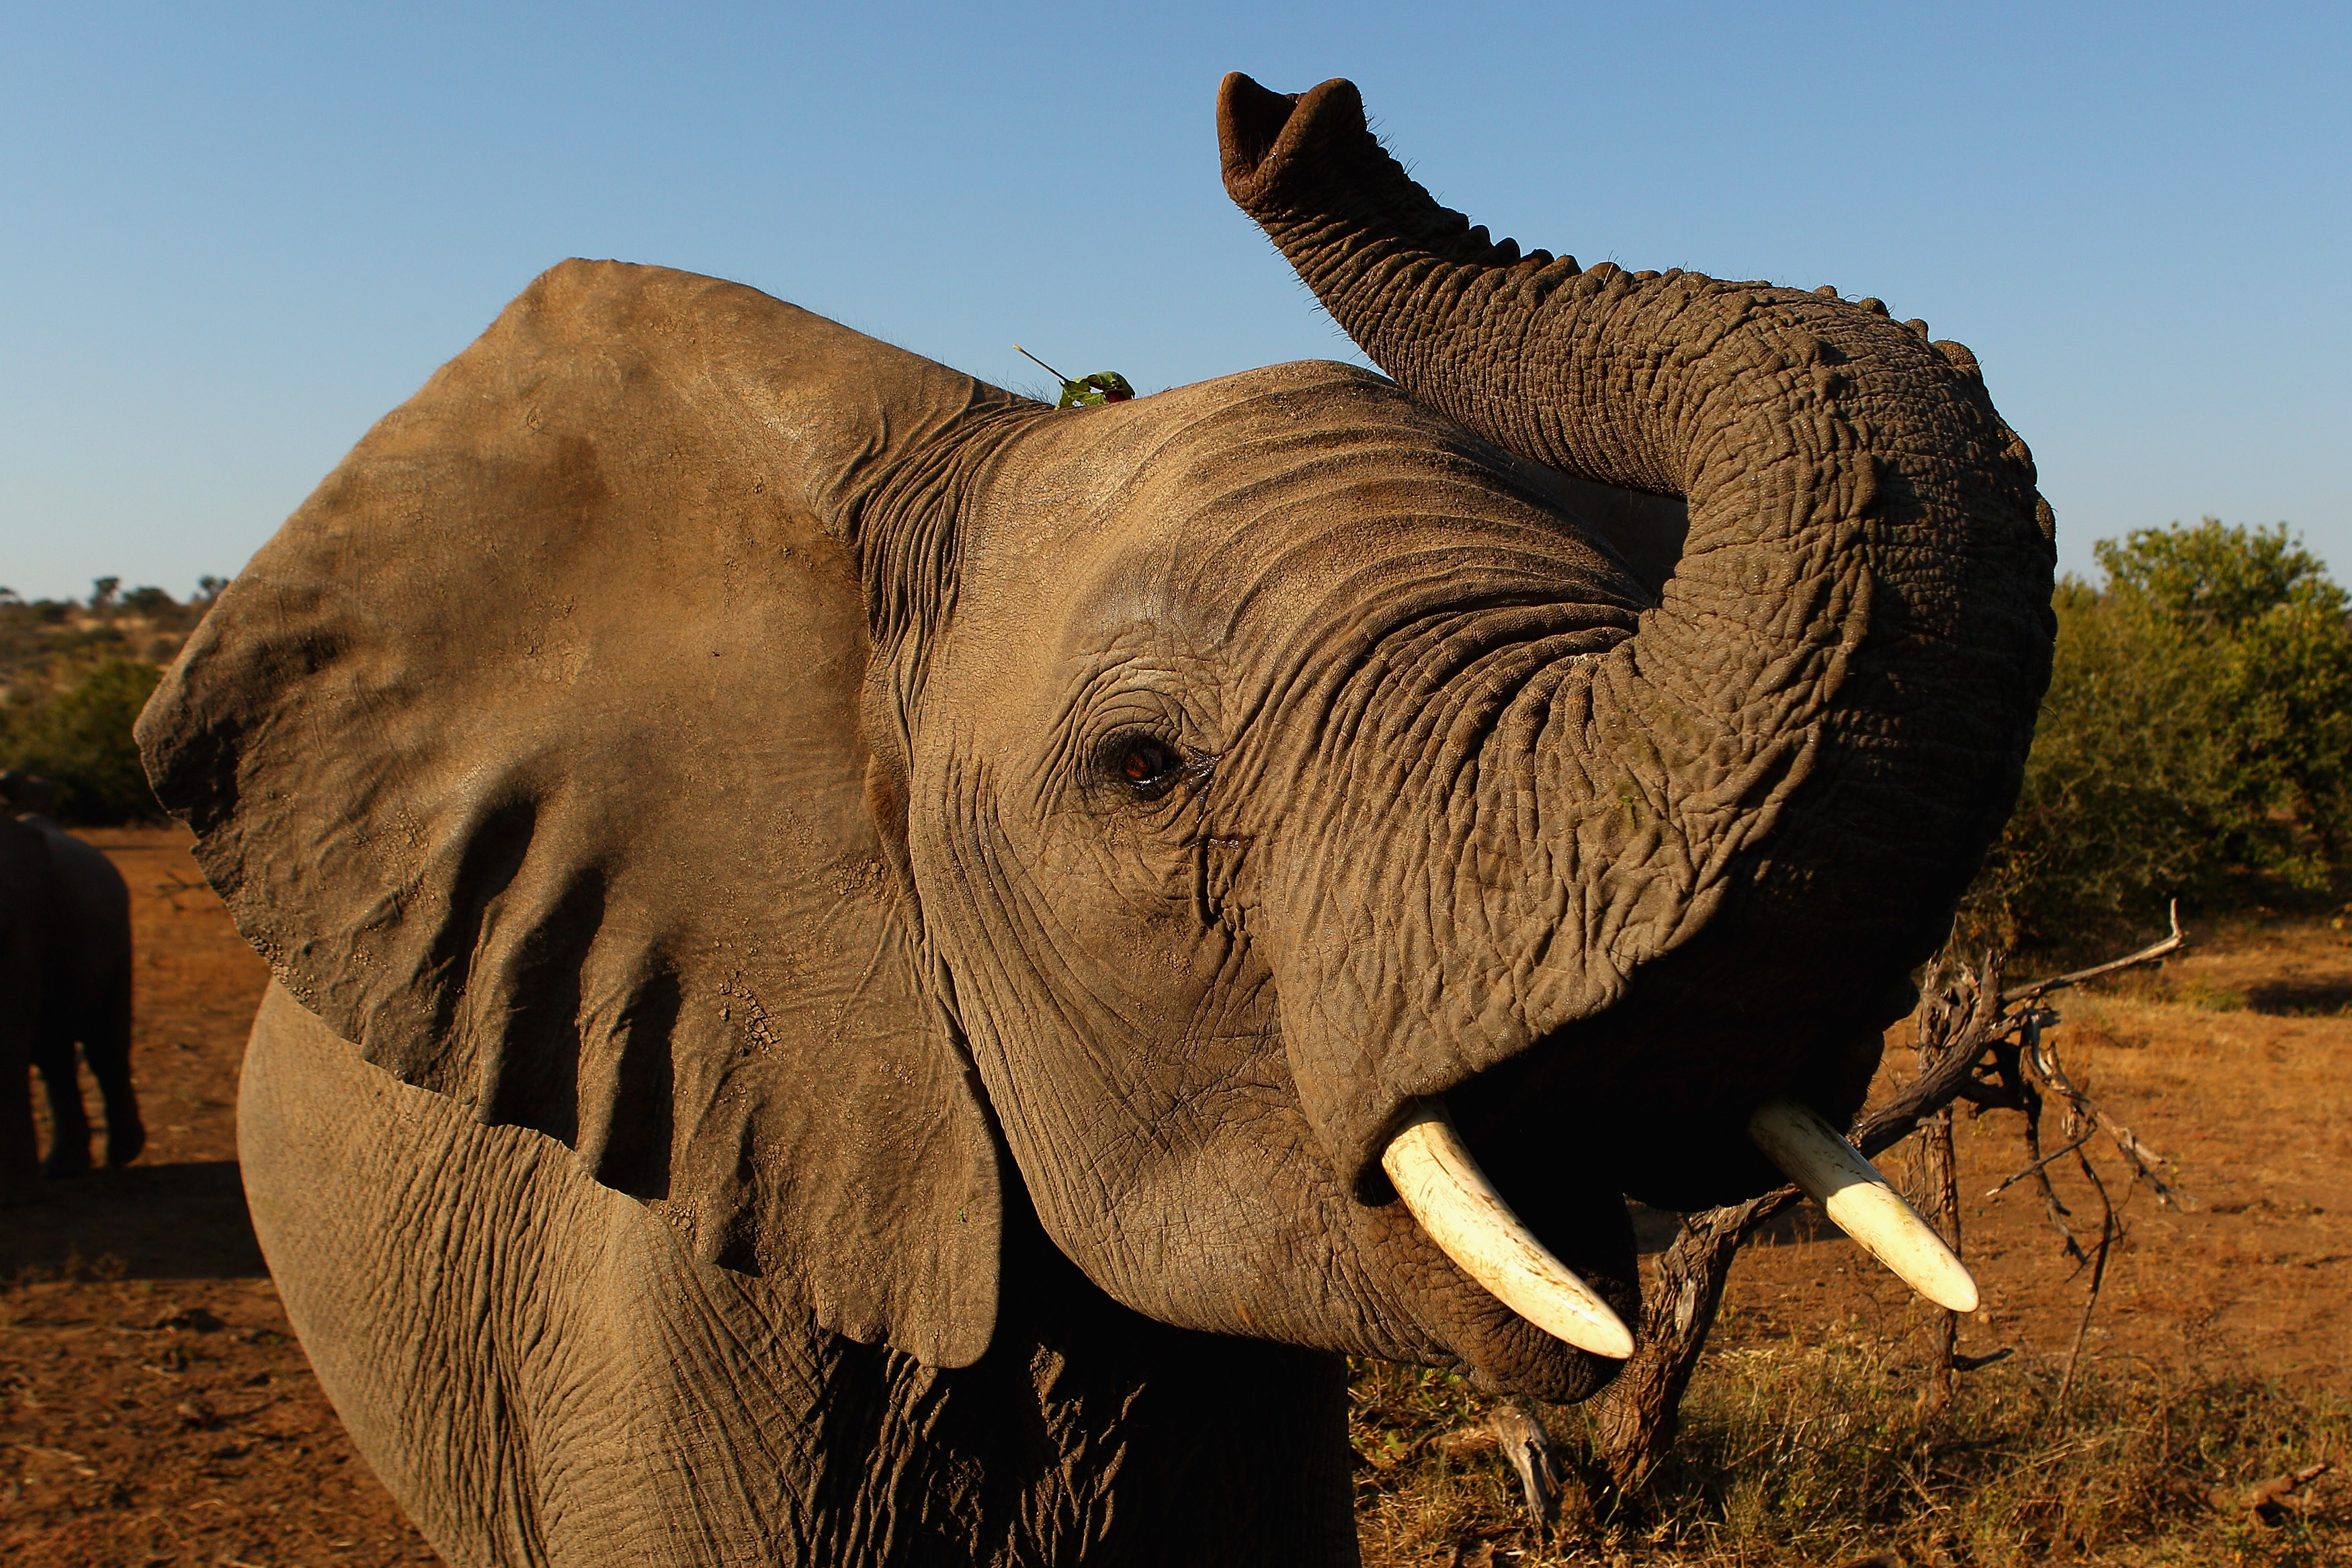 An elephant at the Mashatu game reserve in Mapungubwe, Botswana on July 26, 2010. (Cameron Spencer—Getty Images)